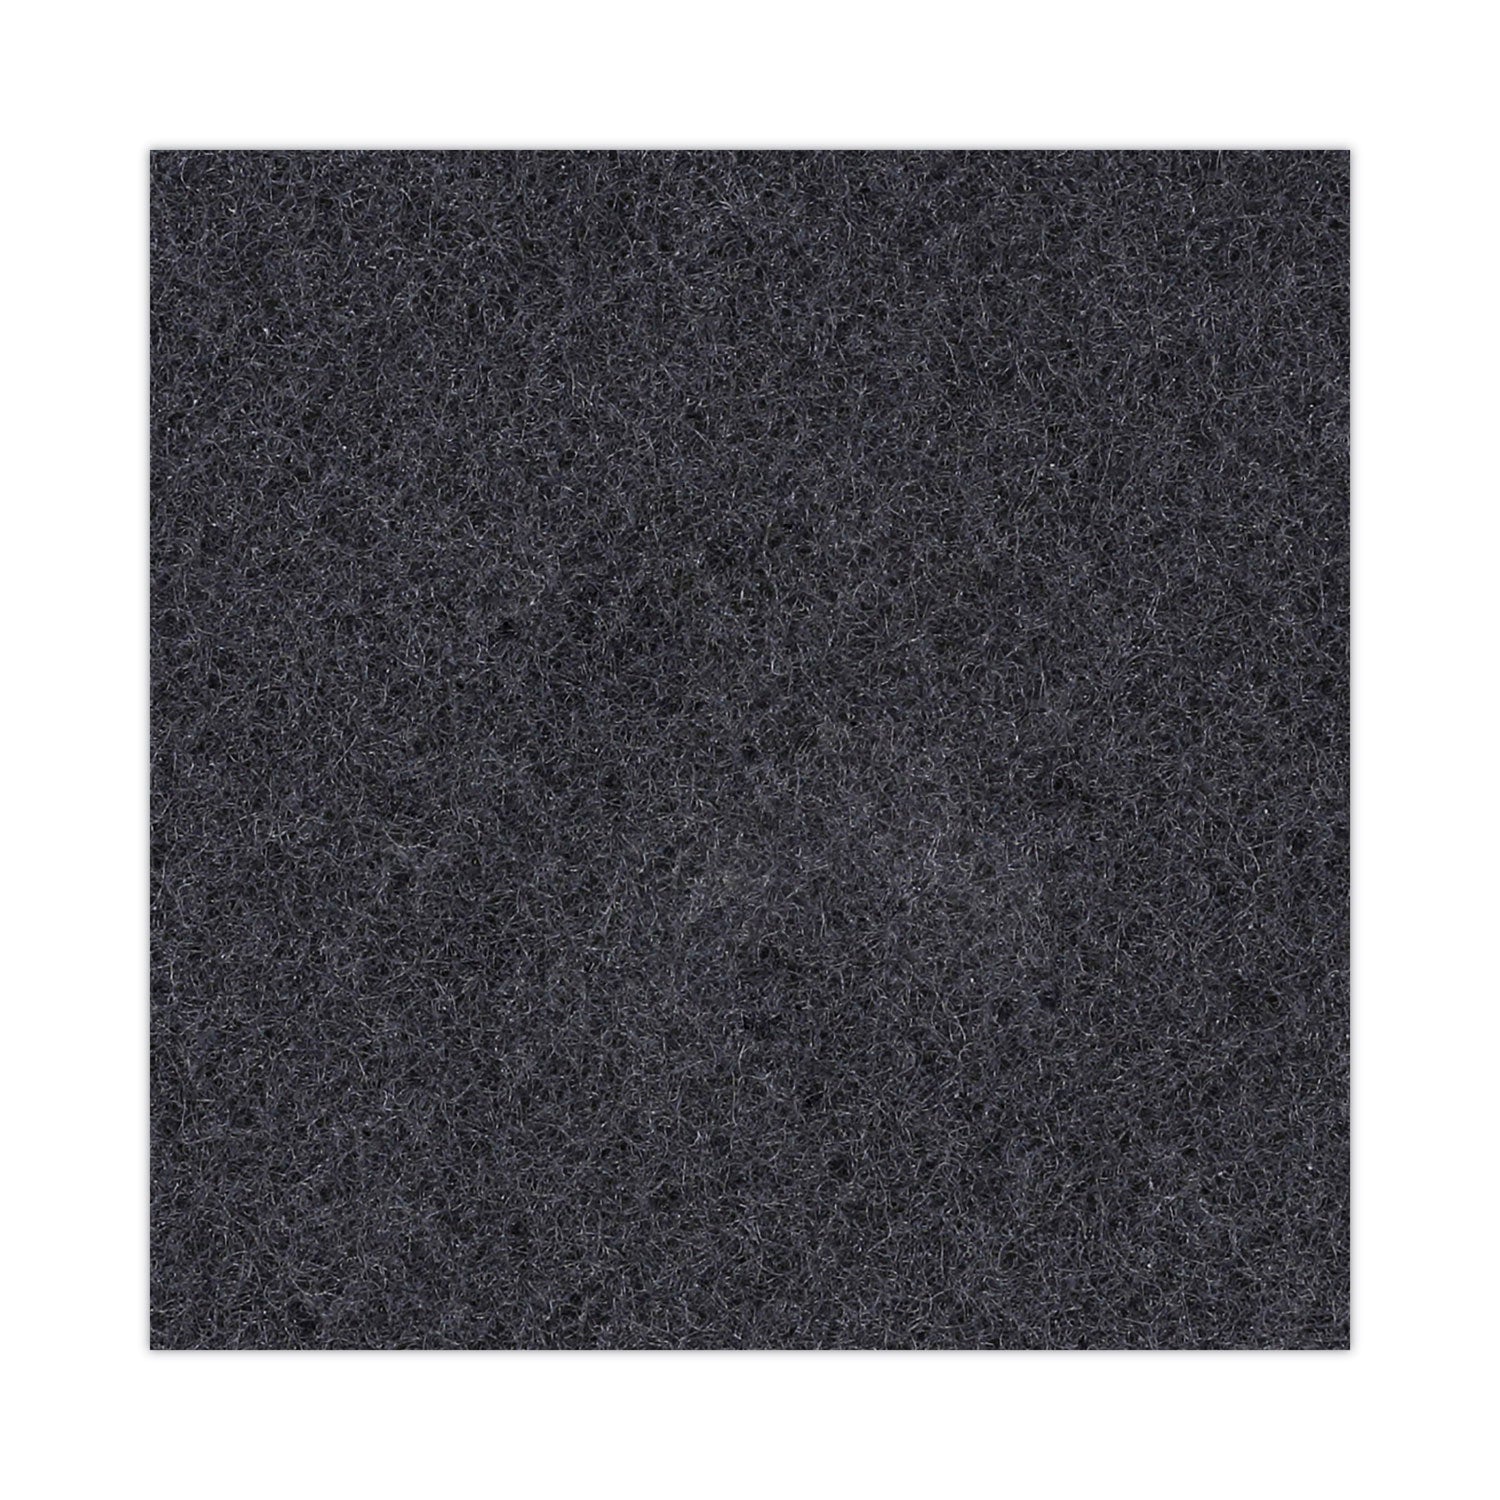 Stripping Floor Pads, 19" Diameter, Black, 5/Carton - 